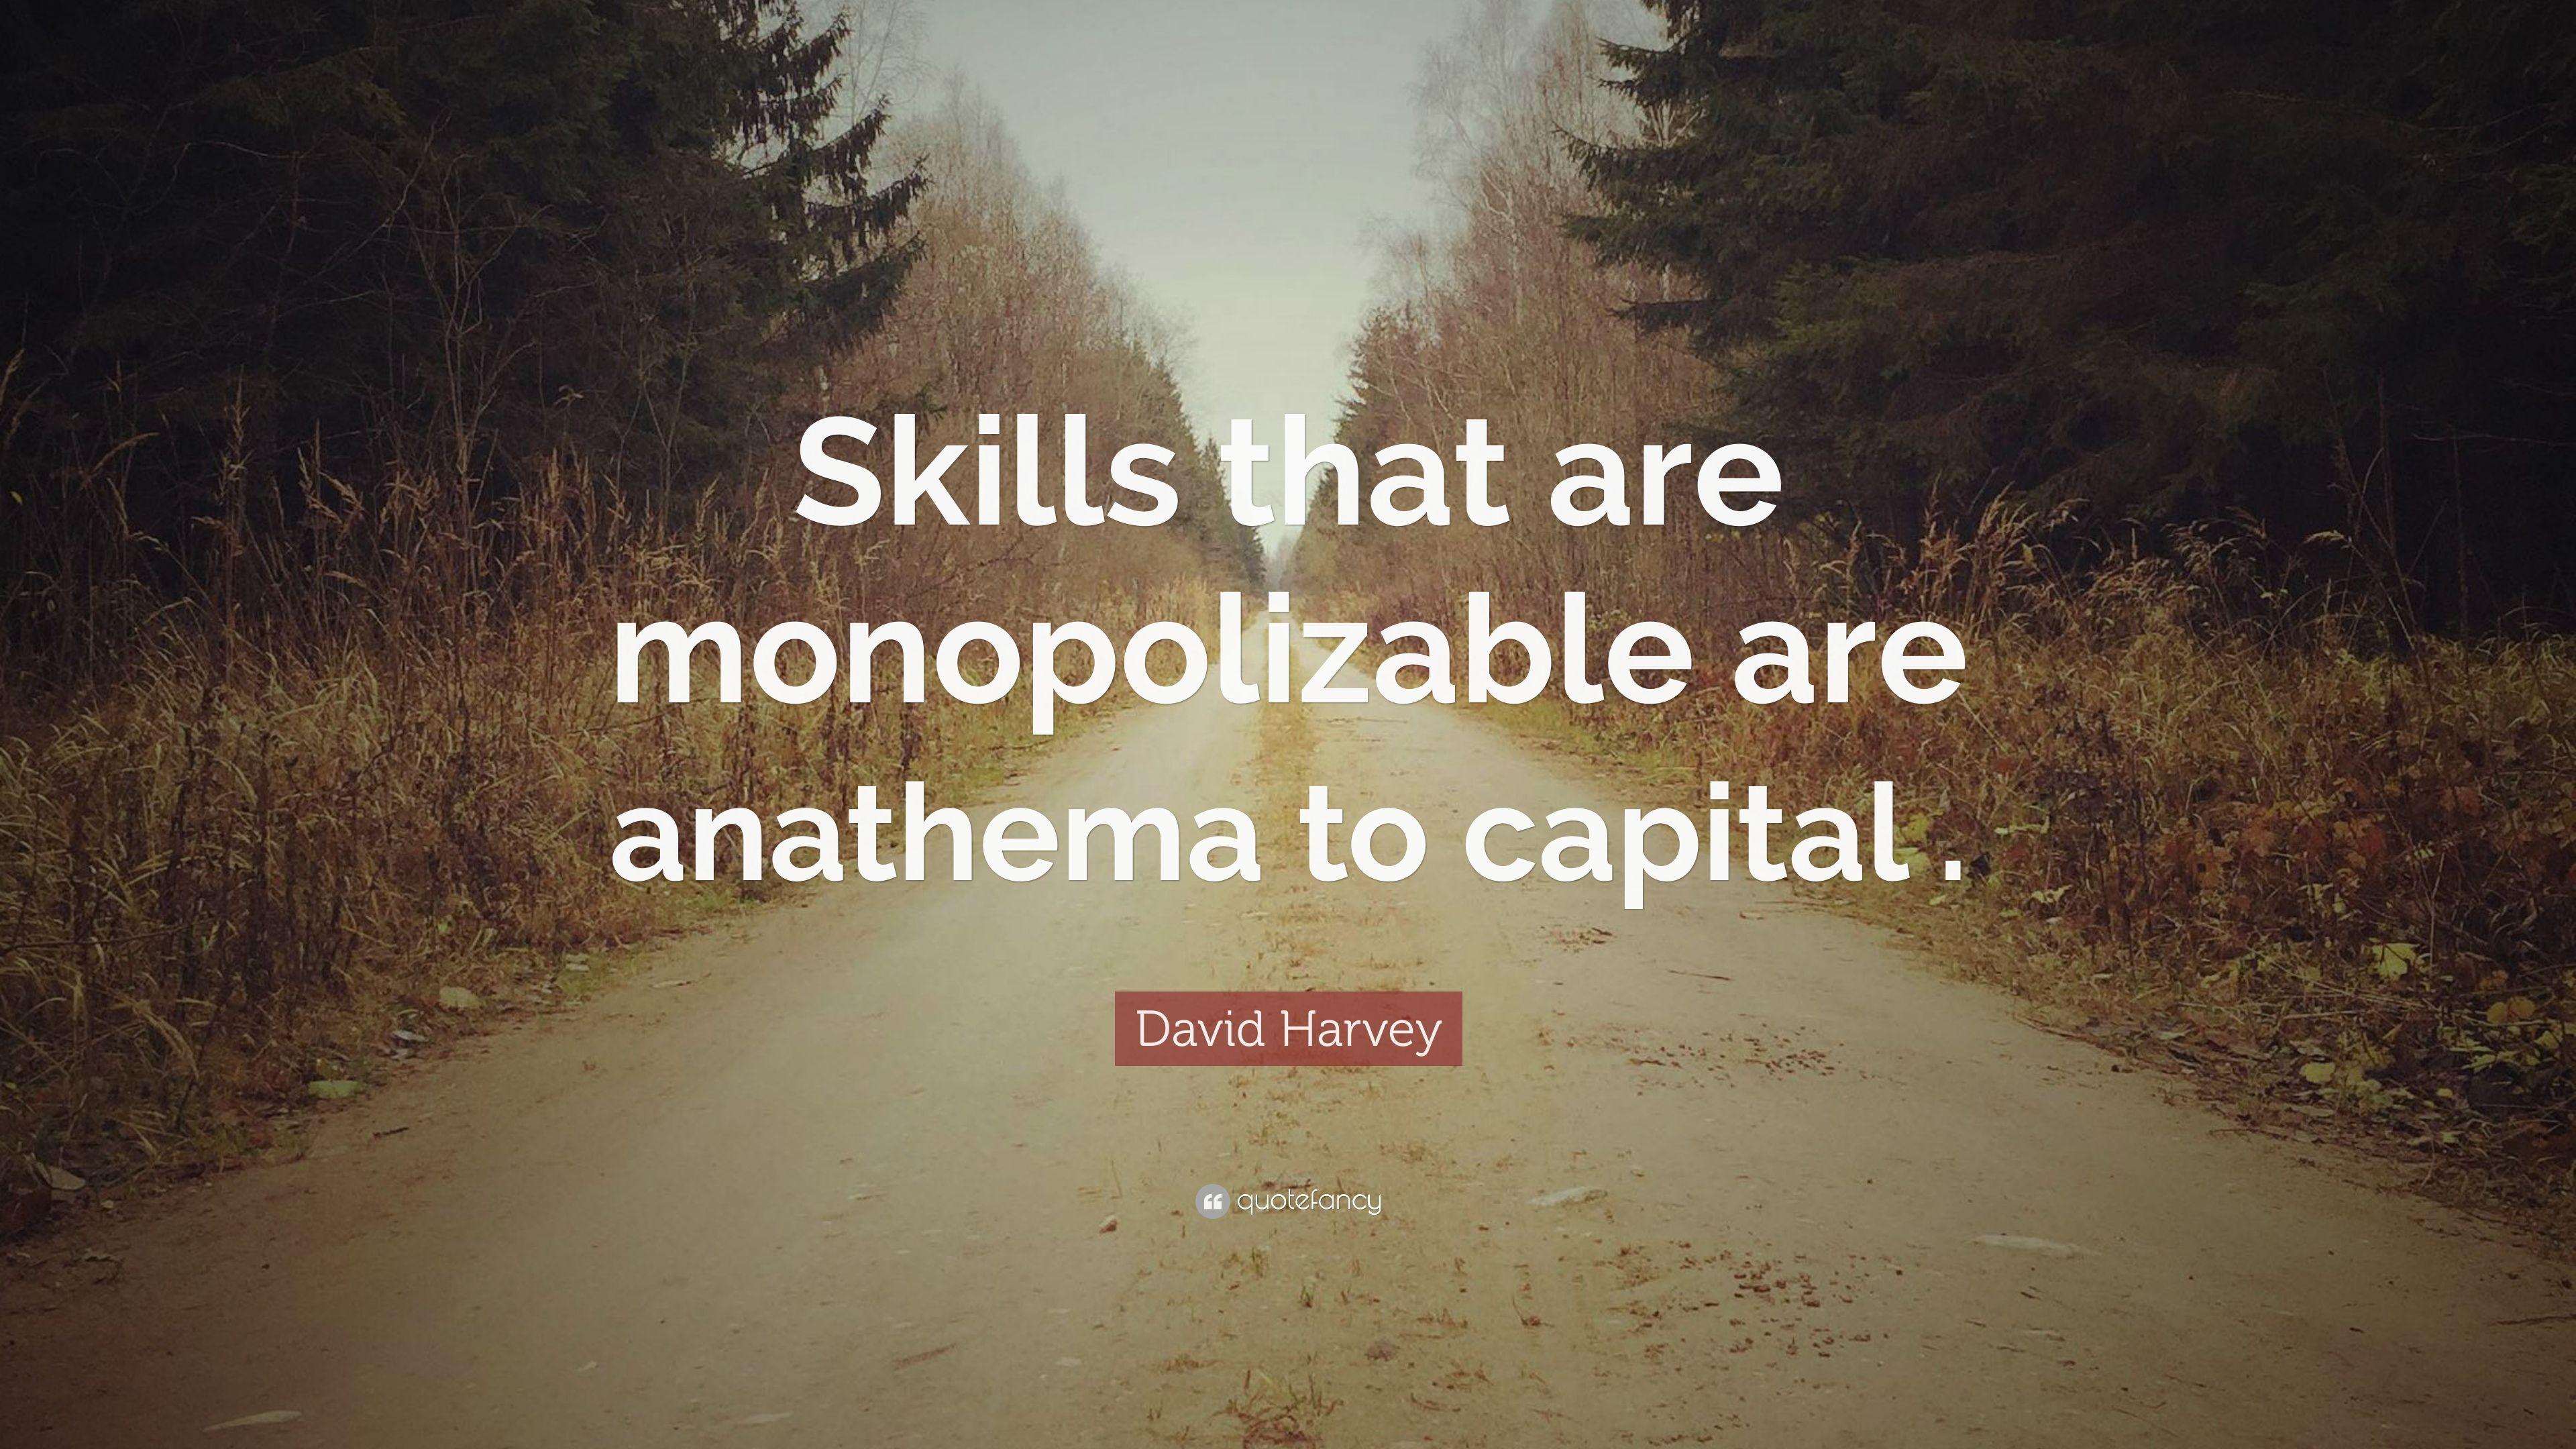 David Harvey Quote: “Skills that are monopolizable are anathema to